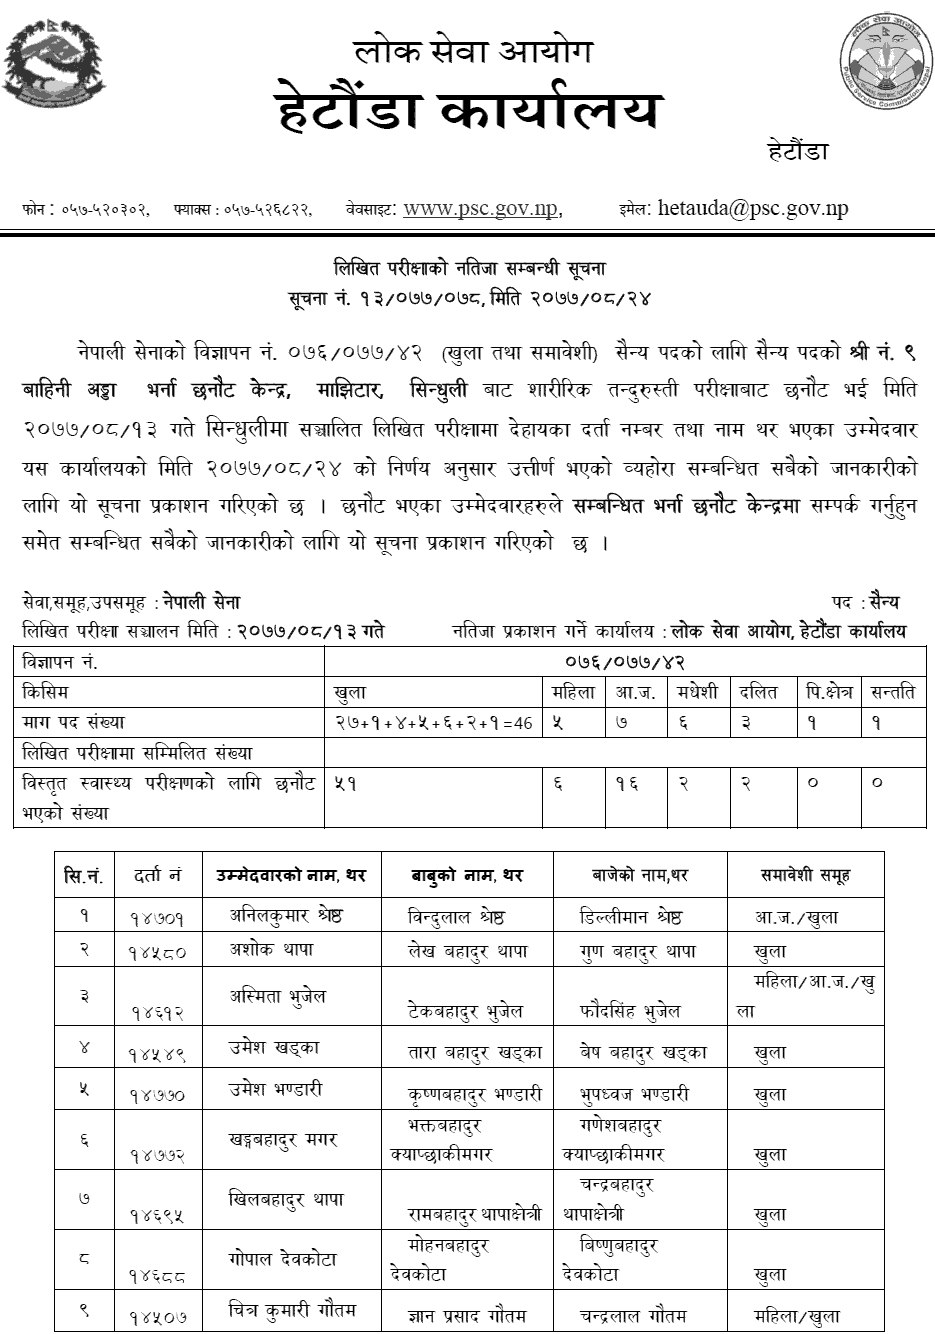 Nepal Army Soldier Written Exam Result of Sindhuli Majhitar